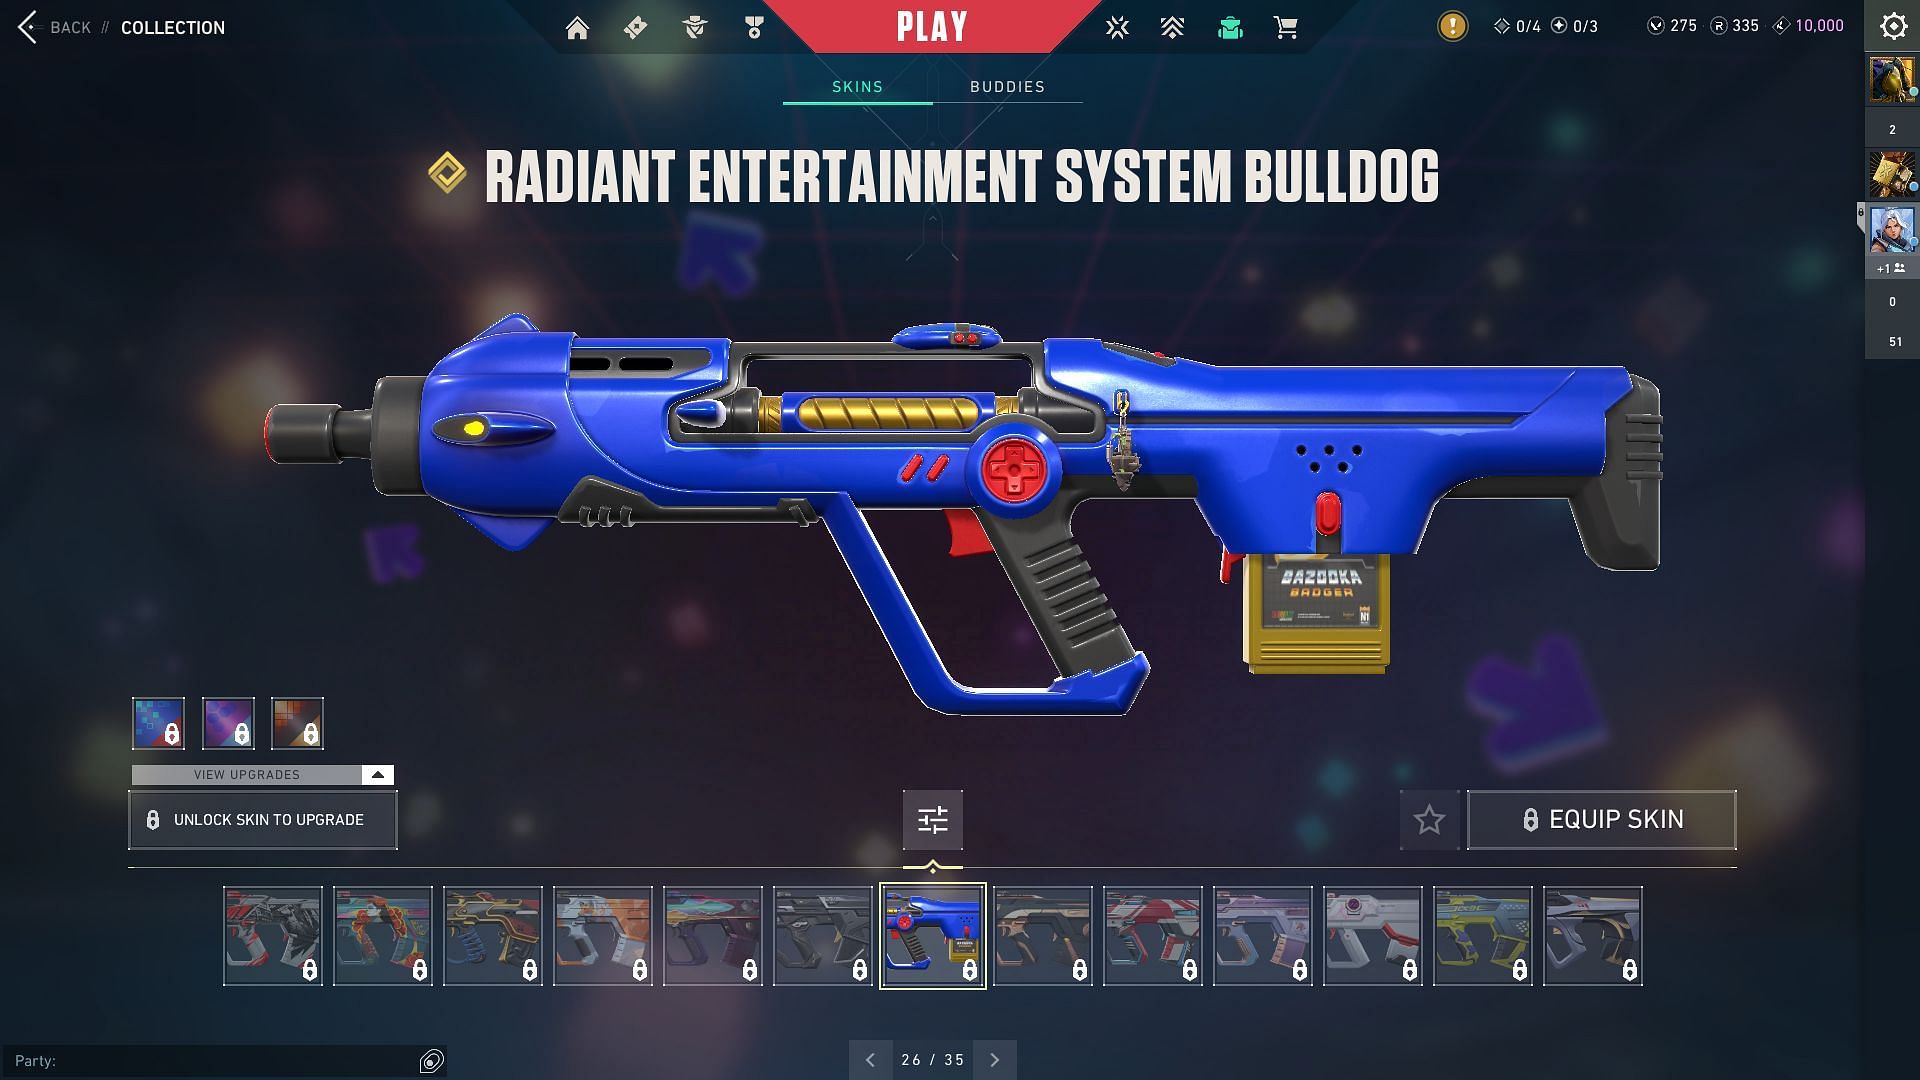 Radiant Entertainment System Bulldog (Image via Sportskeeda and Riot Games)